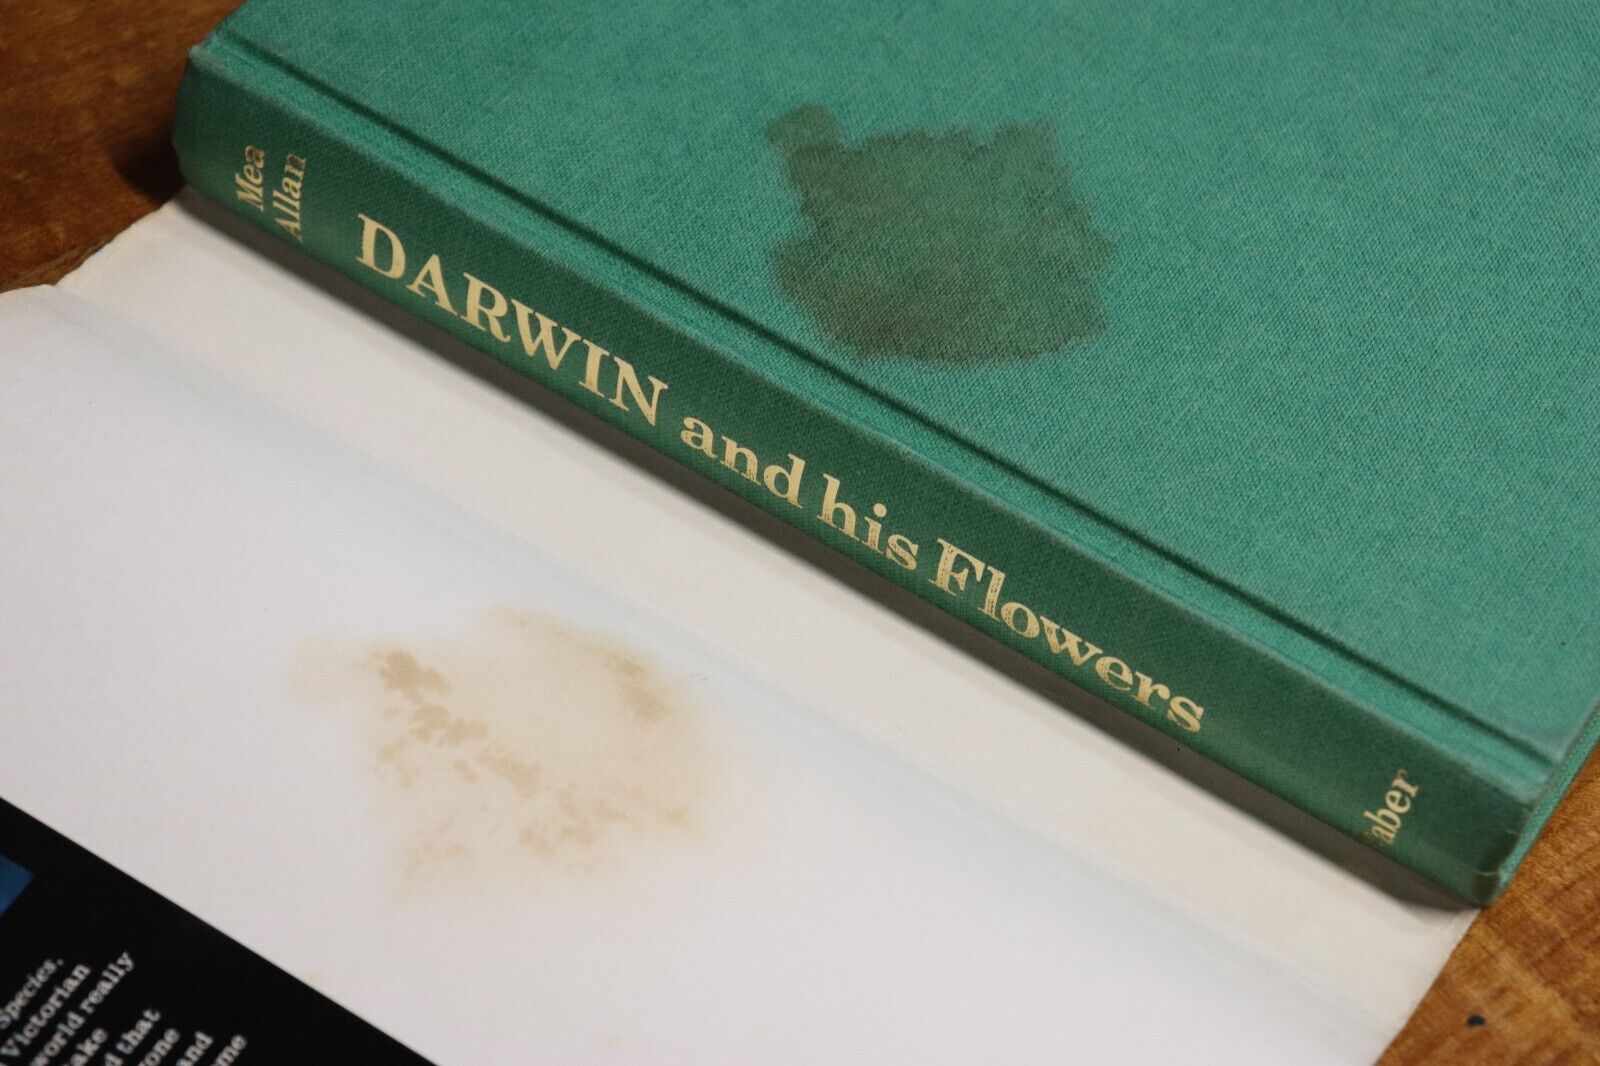 Darwin & His Flowers - Natural Selection - 1977 - Charles Darwin Science Book